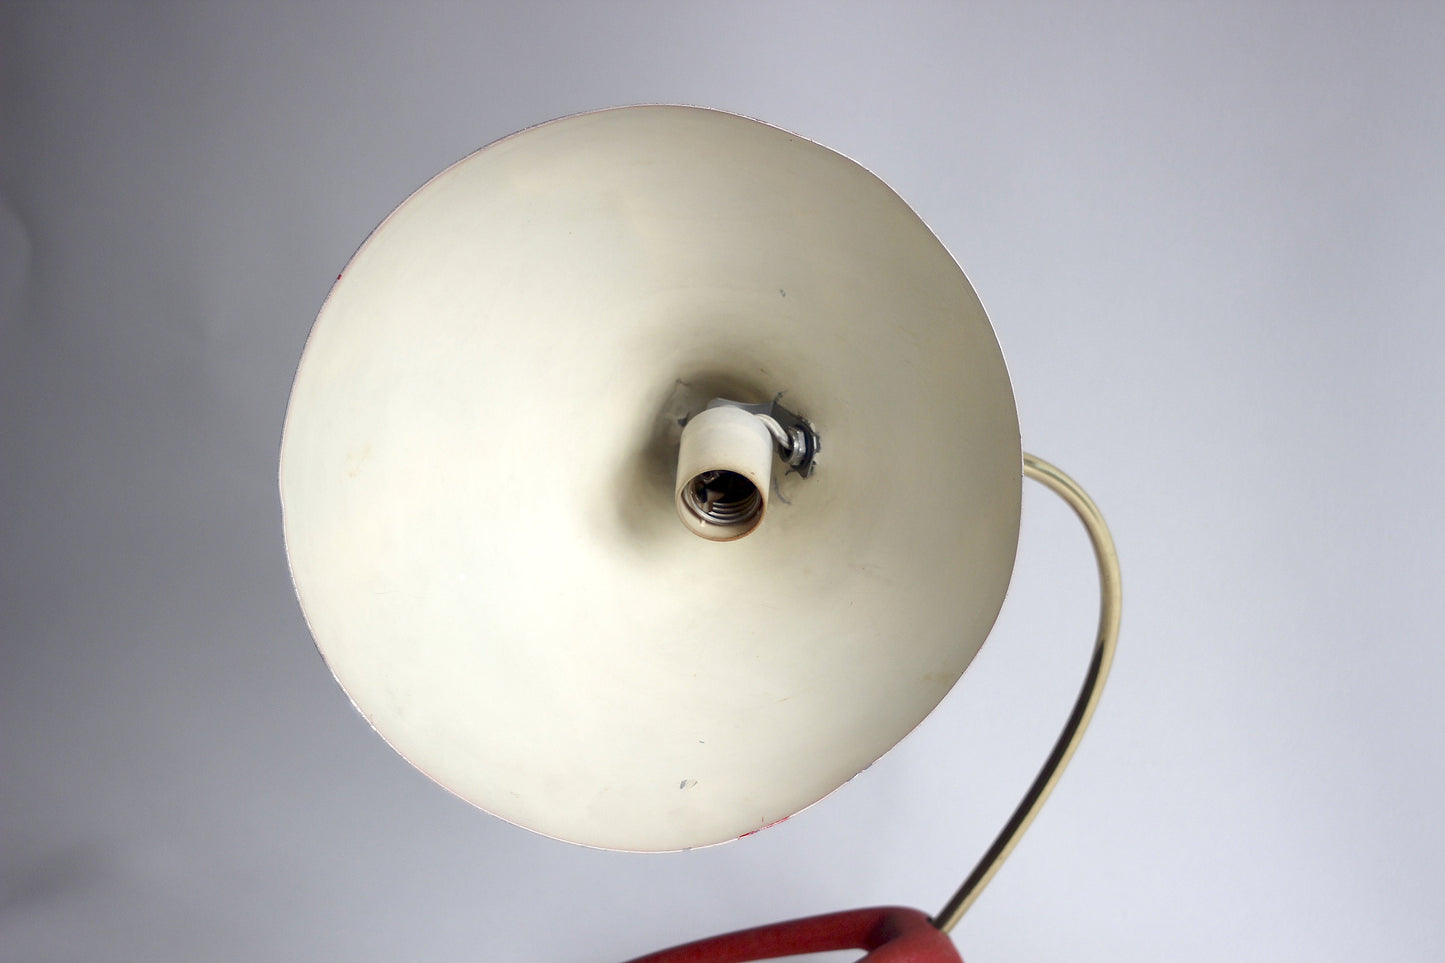 Louis Kalff Cosack 50s mid-century design crow's foot Stilnovo era table lamp desk